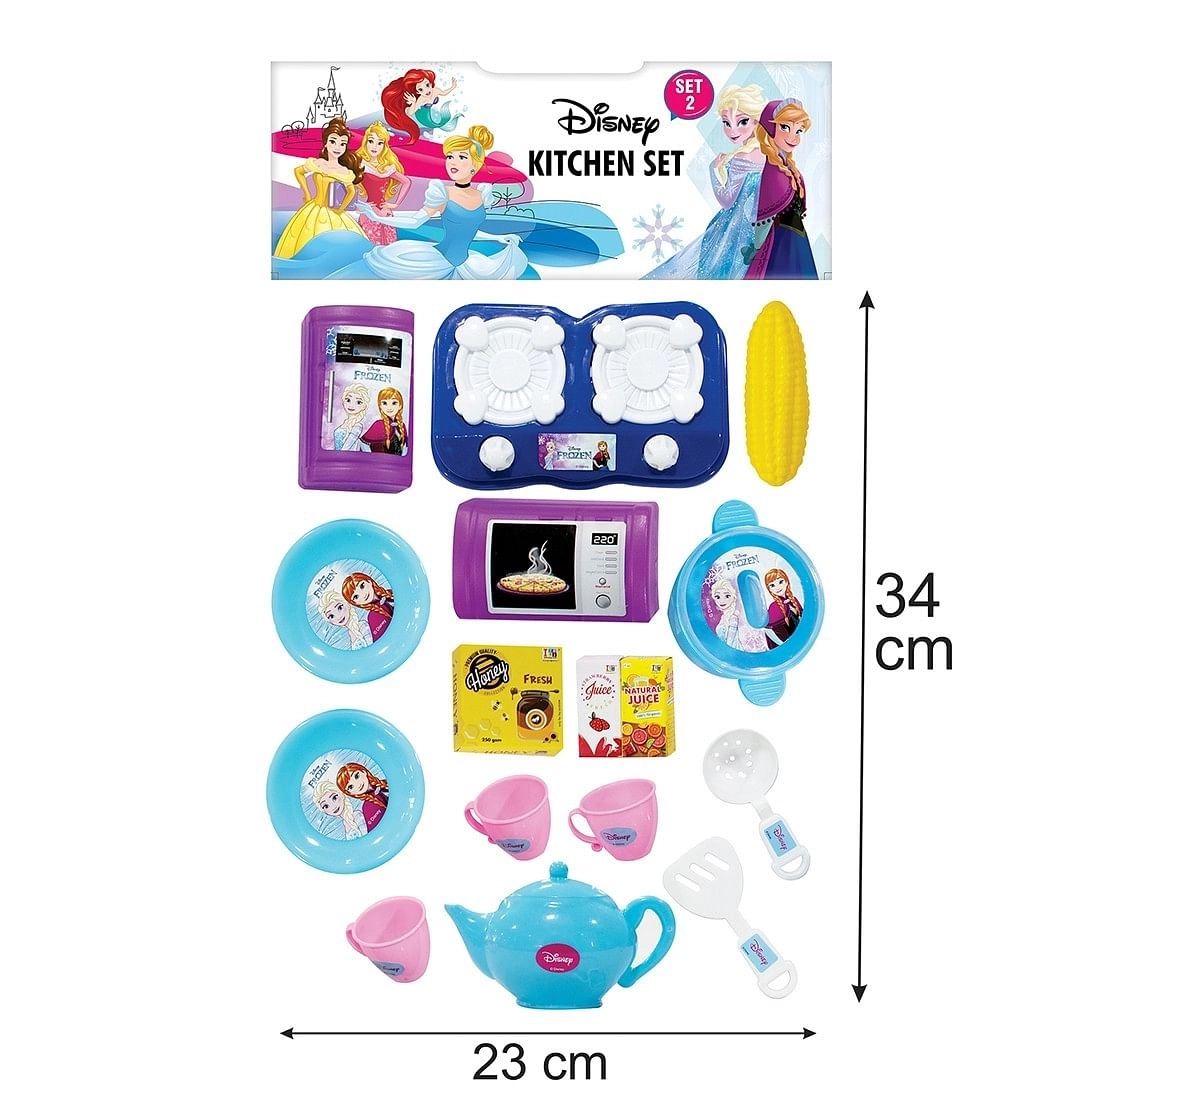 Disney Frozen Kitchen set of 16 pcs. role play toys for kids, 3Y+